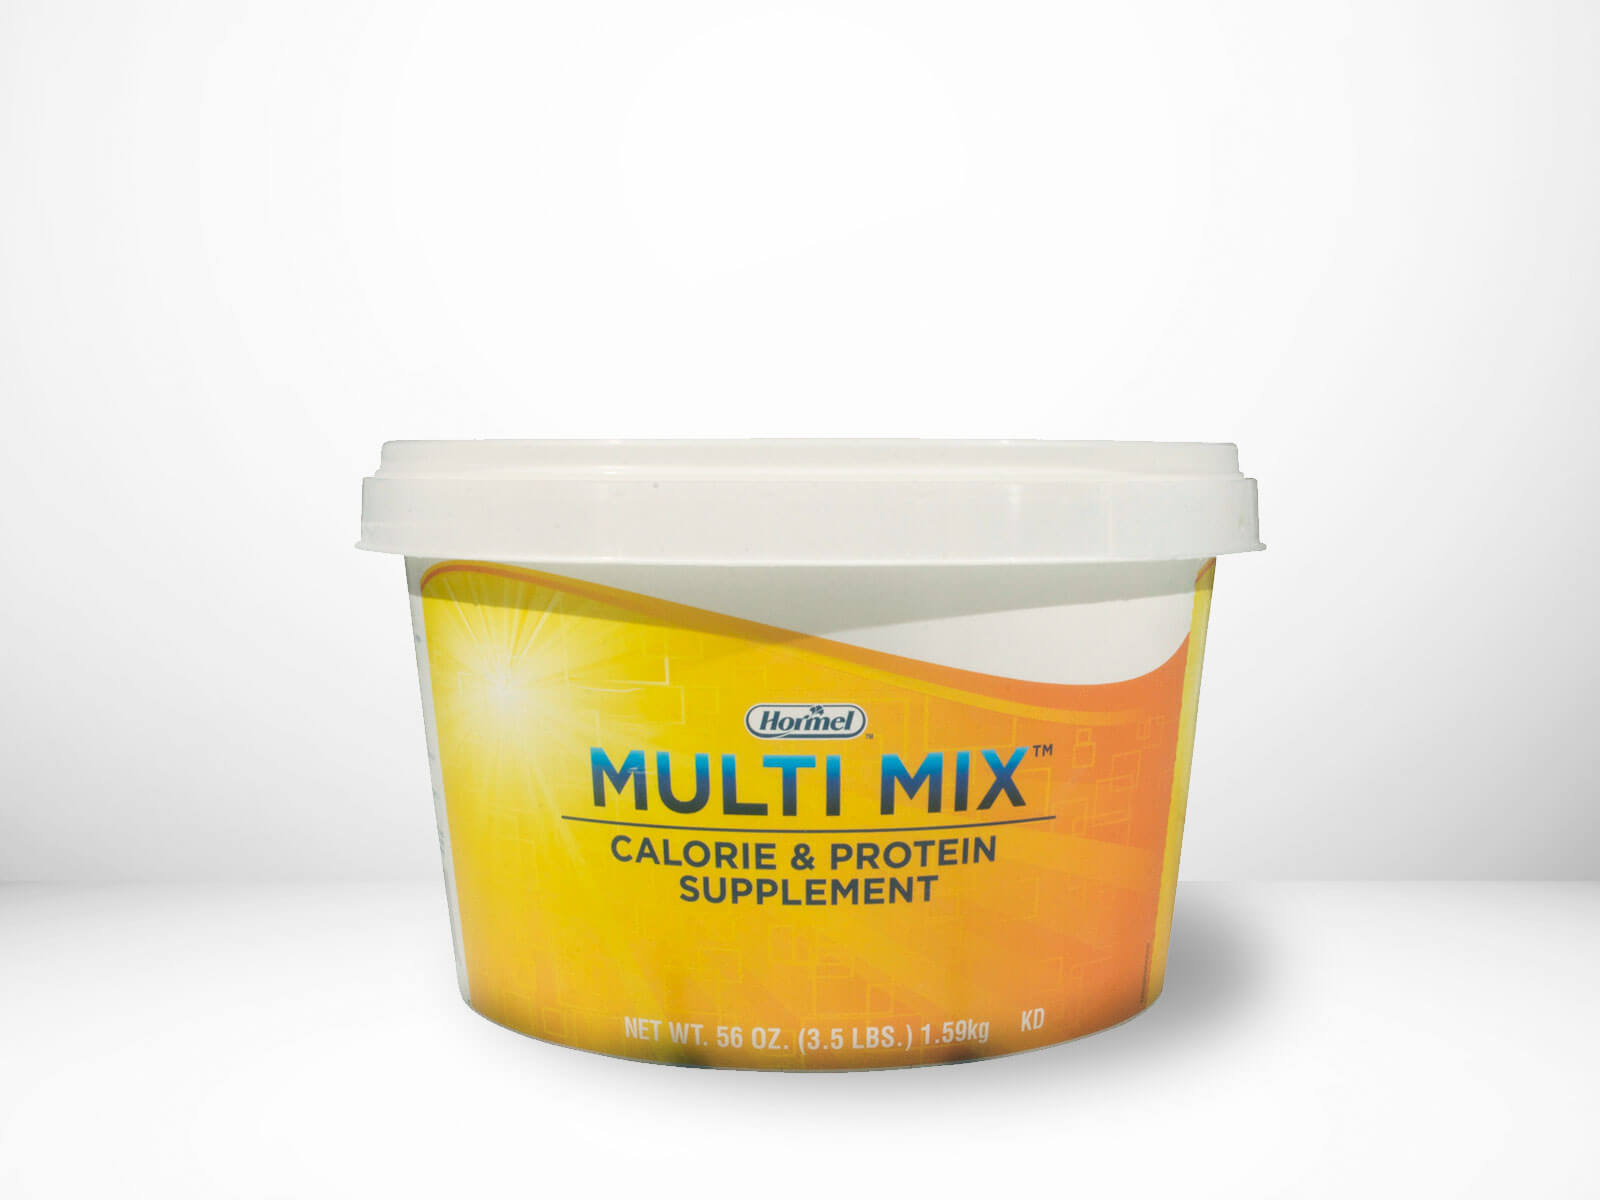 Mix™ Calorie & Protein Supplement Mix - Hormel Health